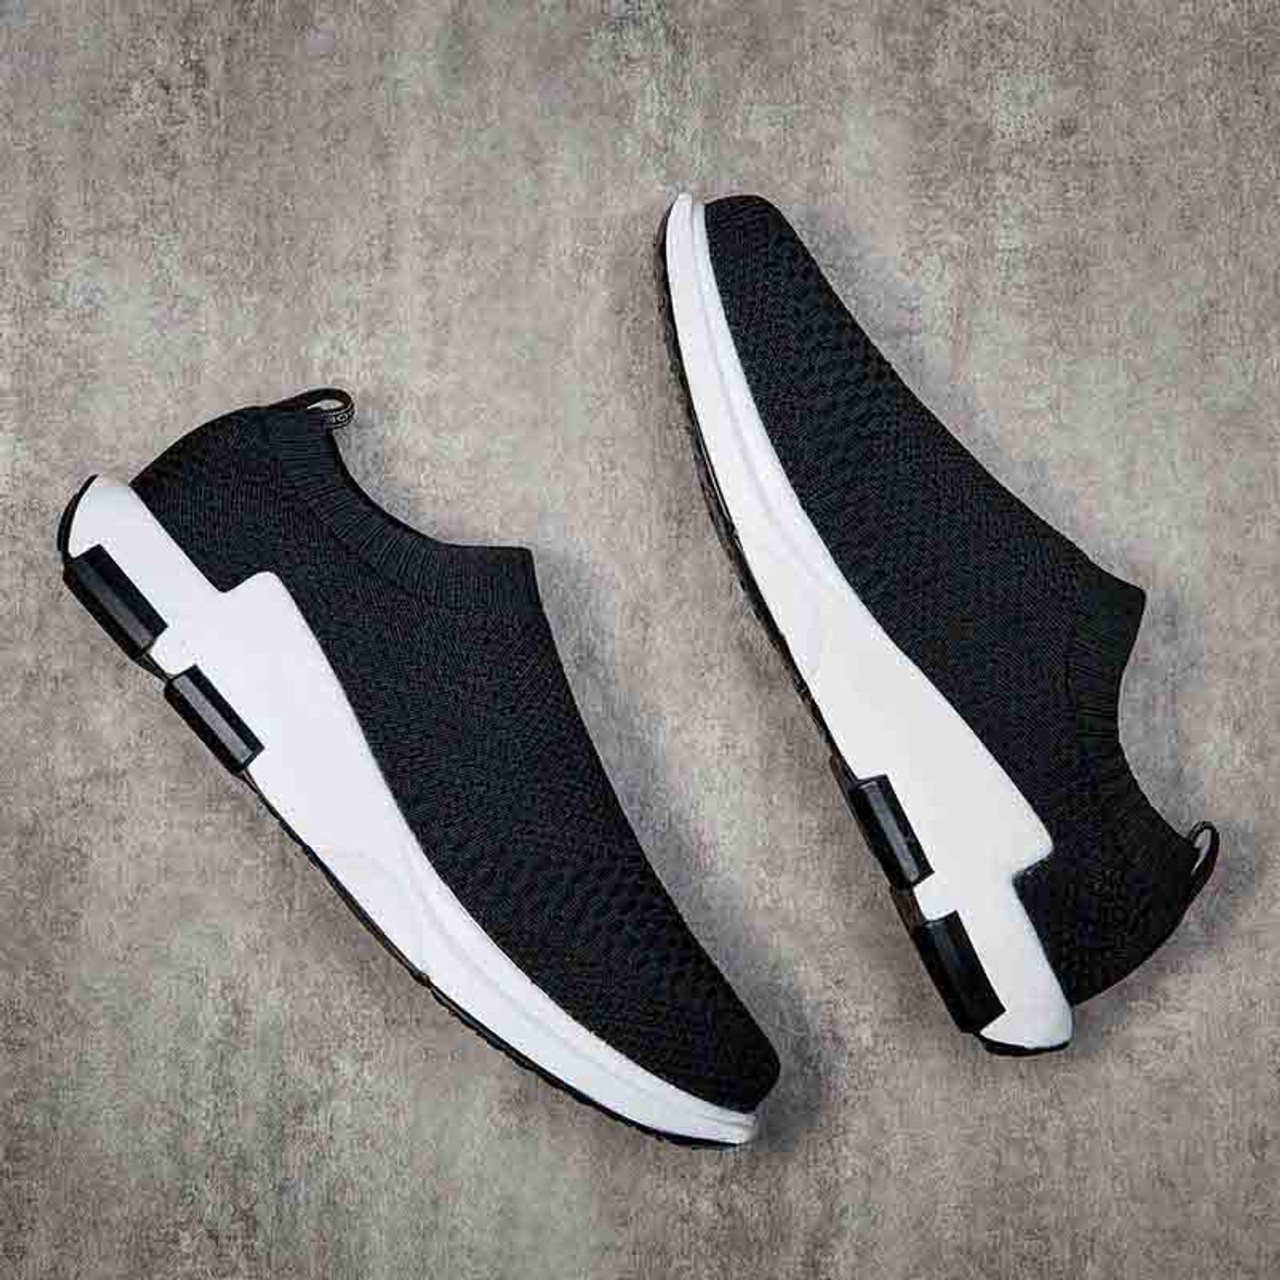 Black white check flyknit slip on shoe sneaker | Mens shoe sneakers ...